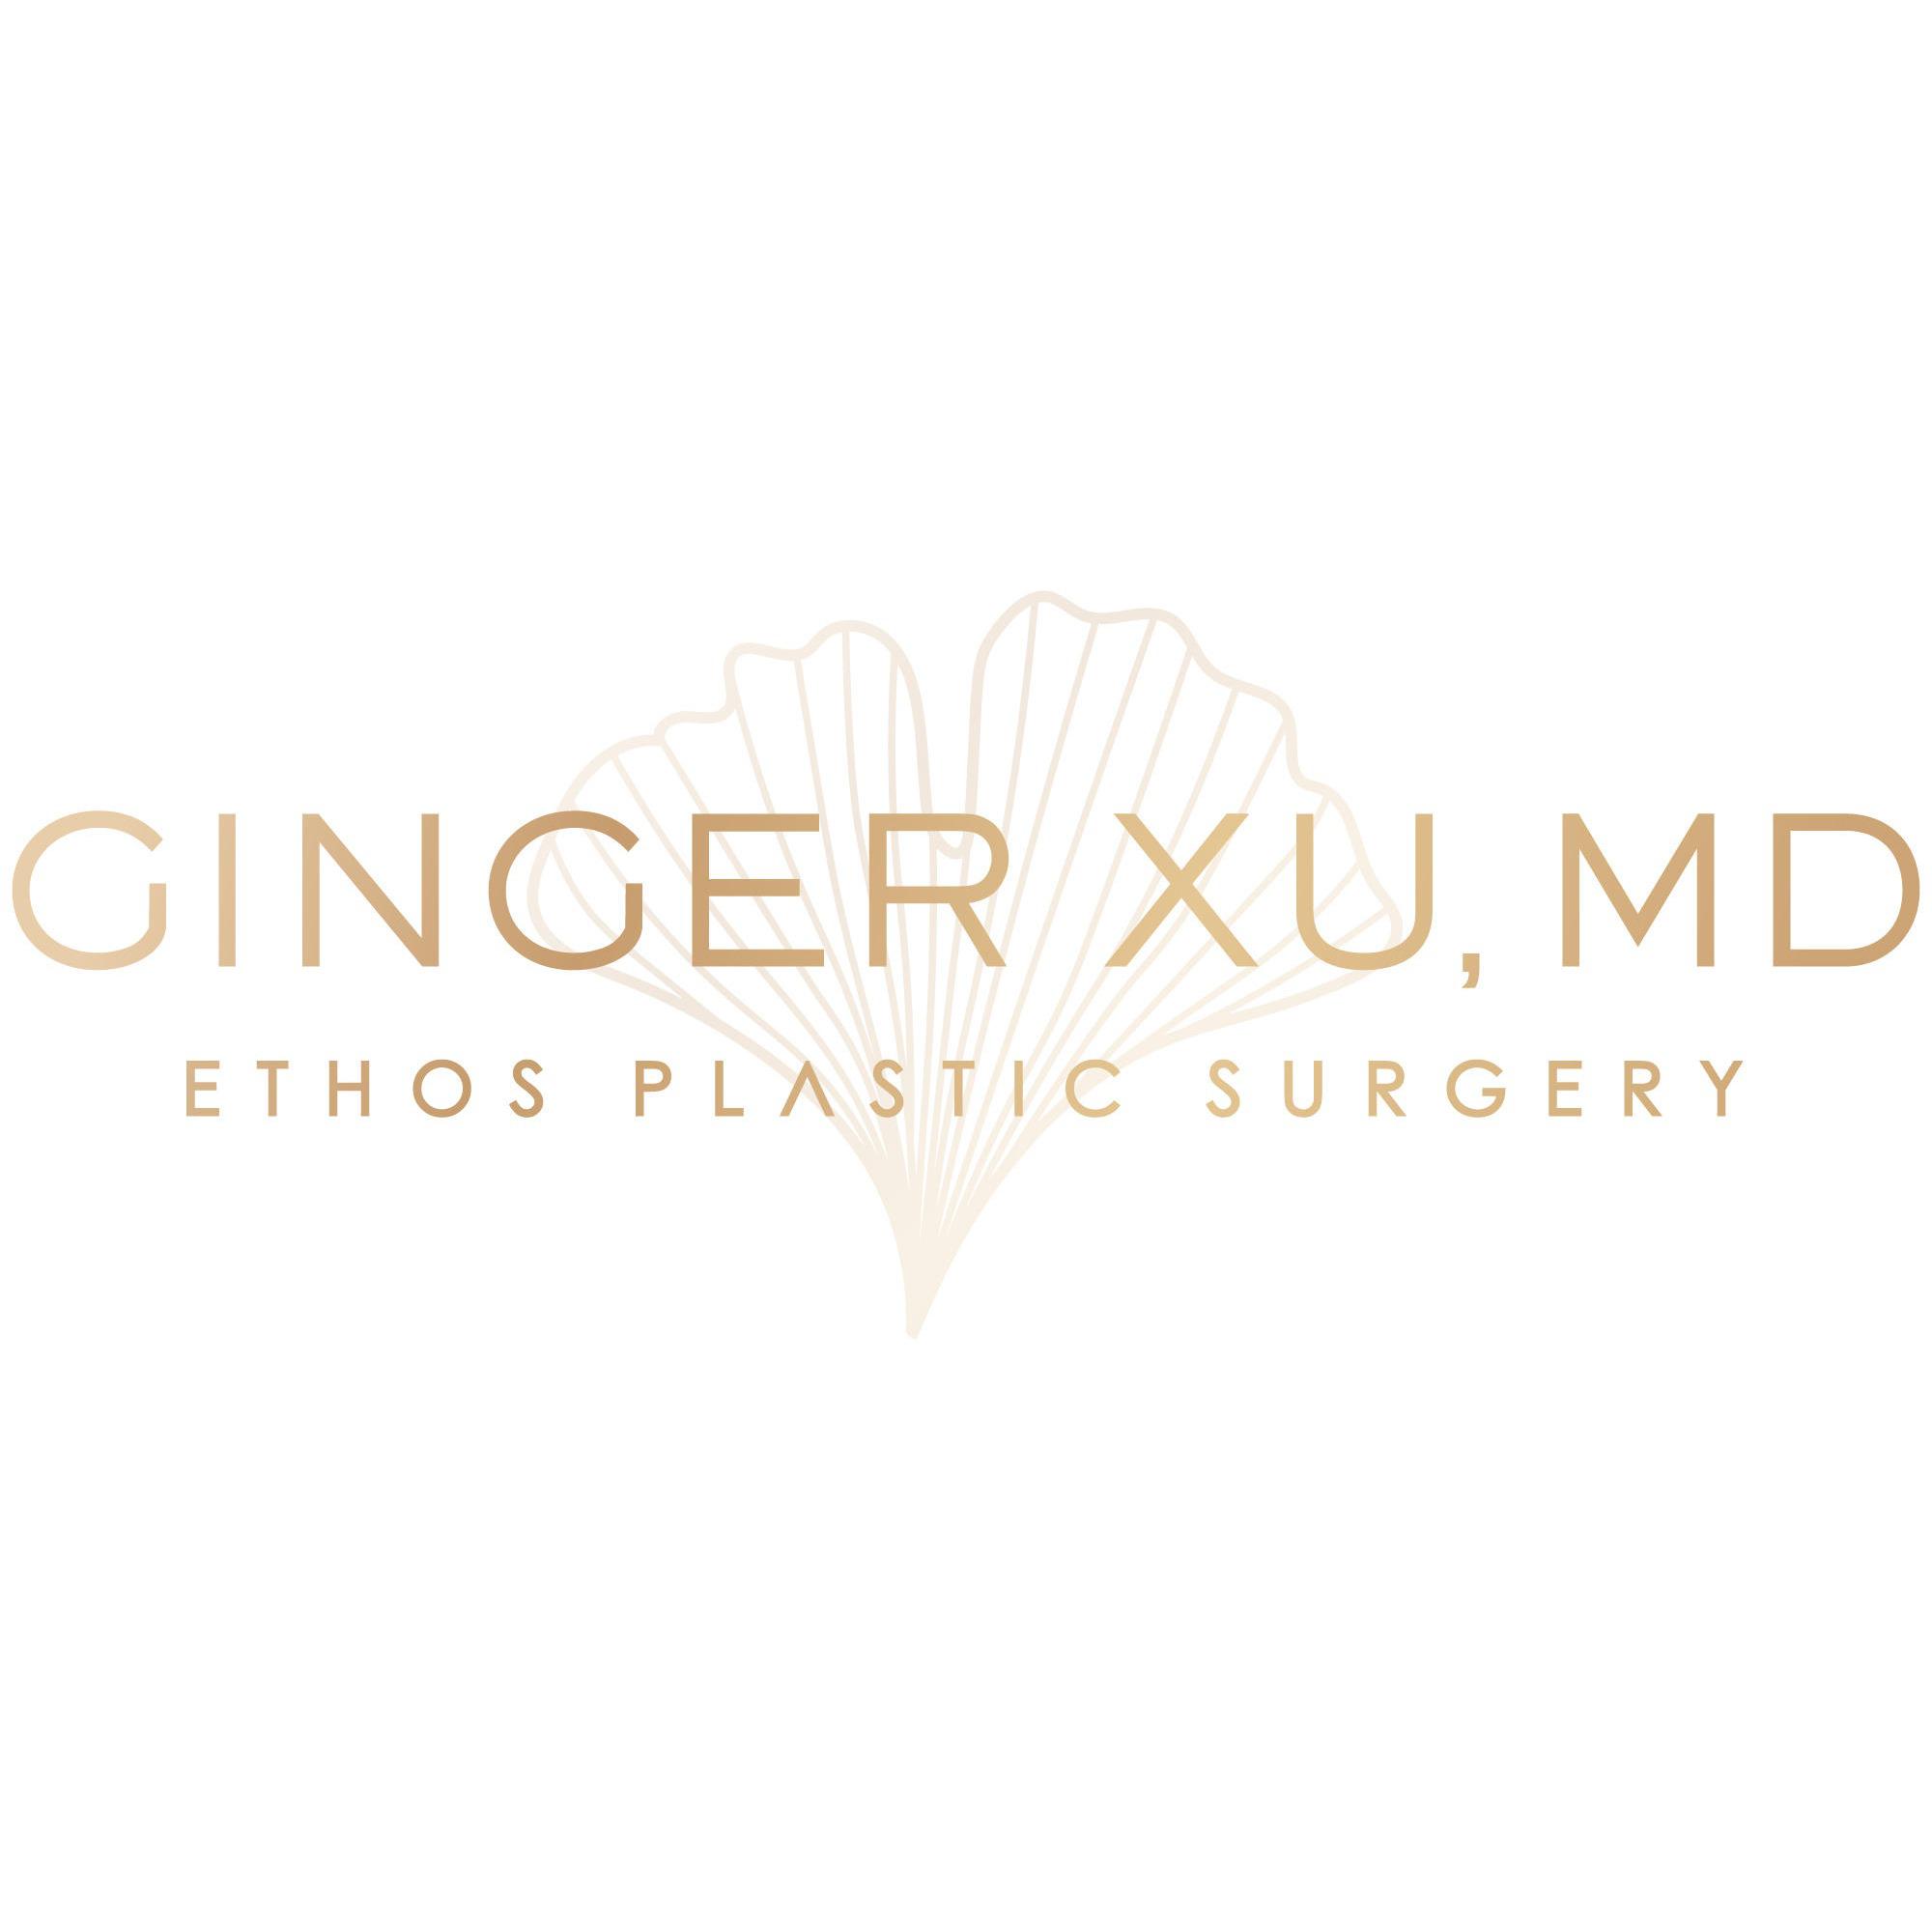 Ethos Plastic Surgery: Ginger Xu, M.D.